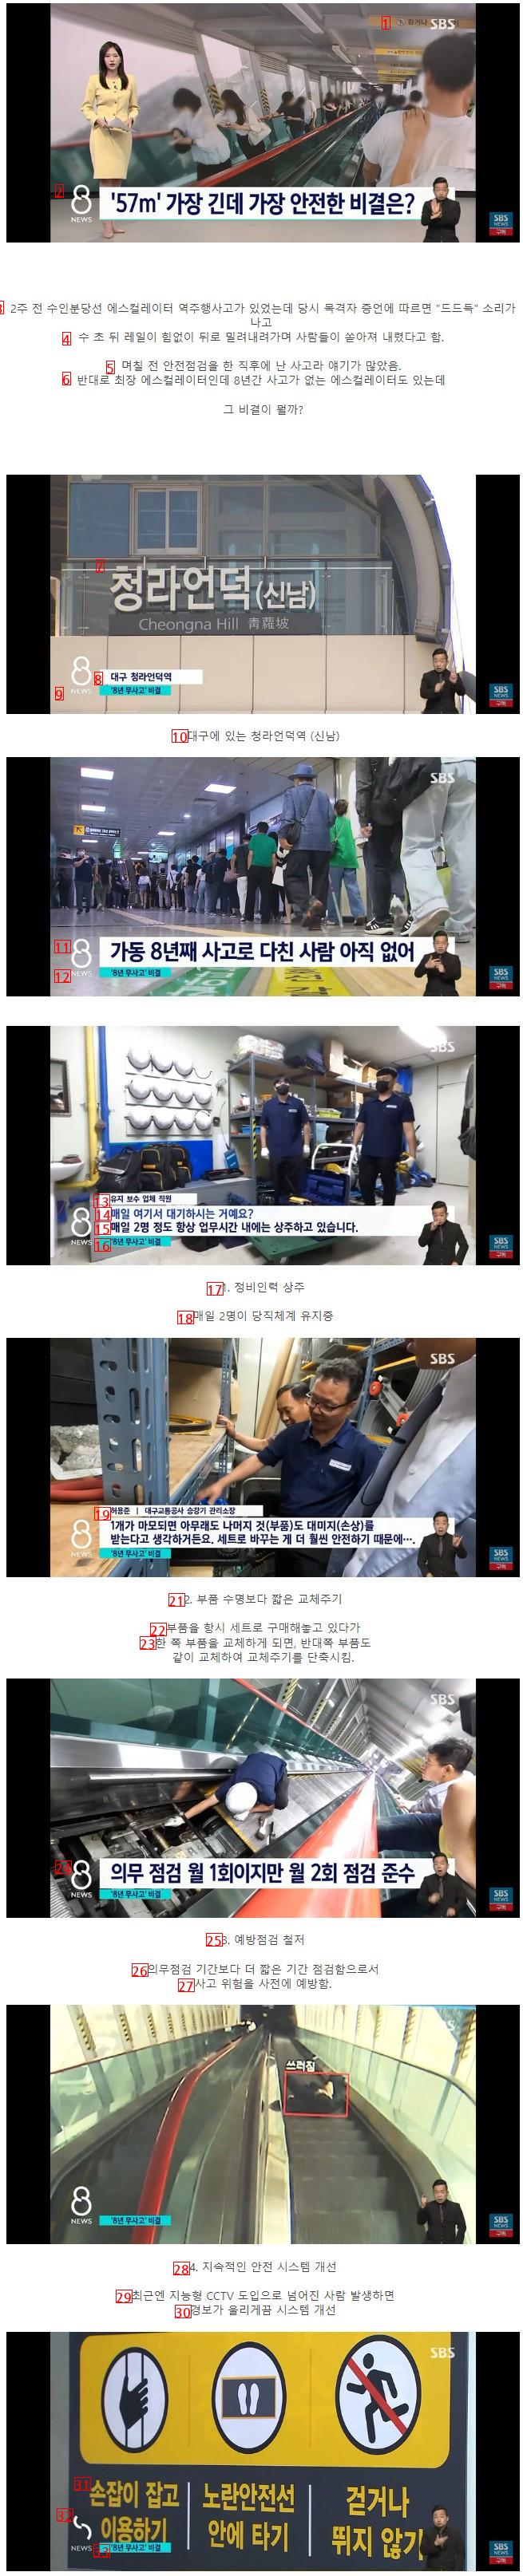 57M 韓国最長距離エスカレーターが無事故の理由